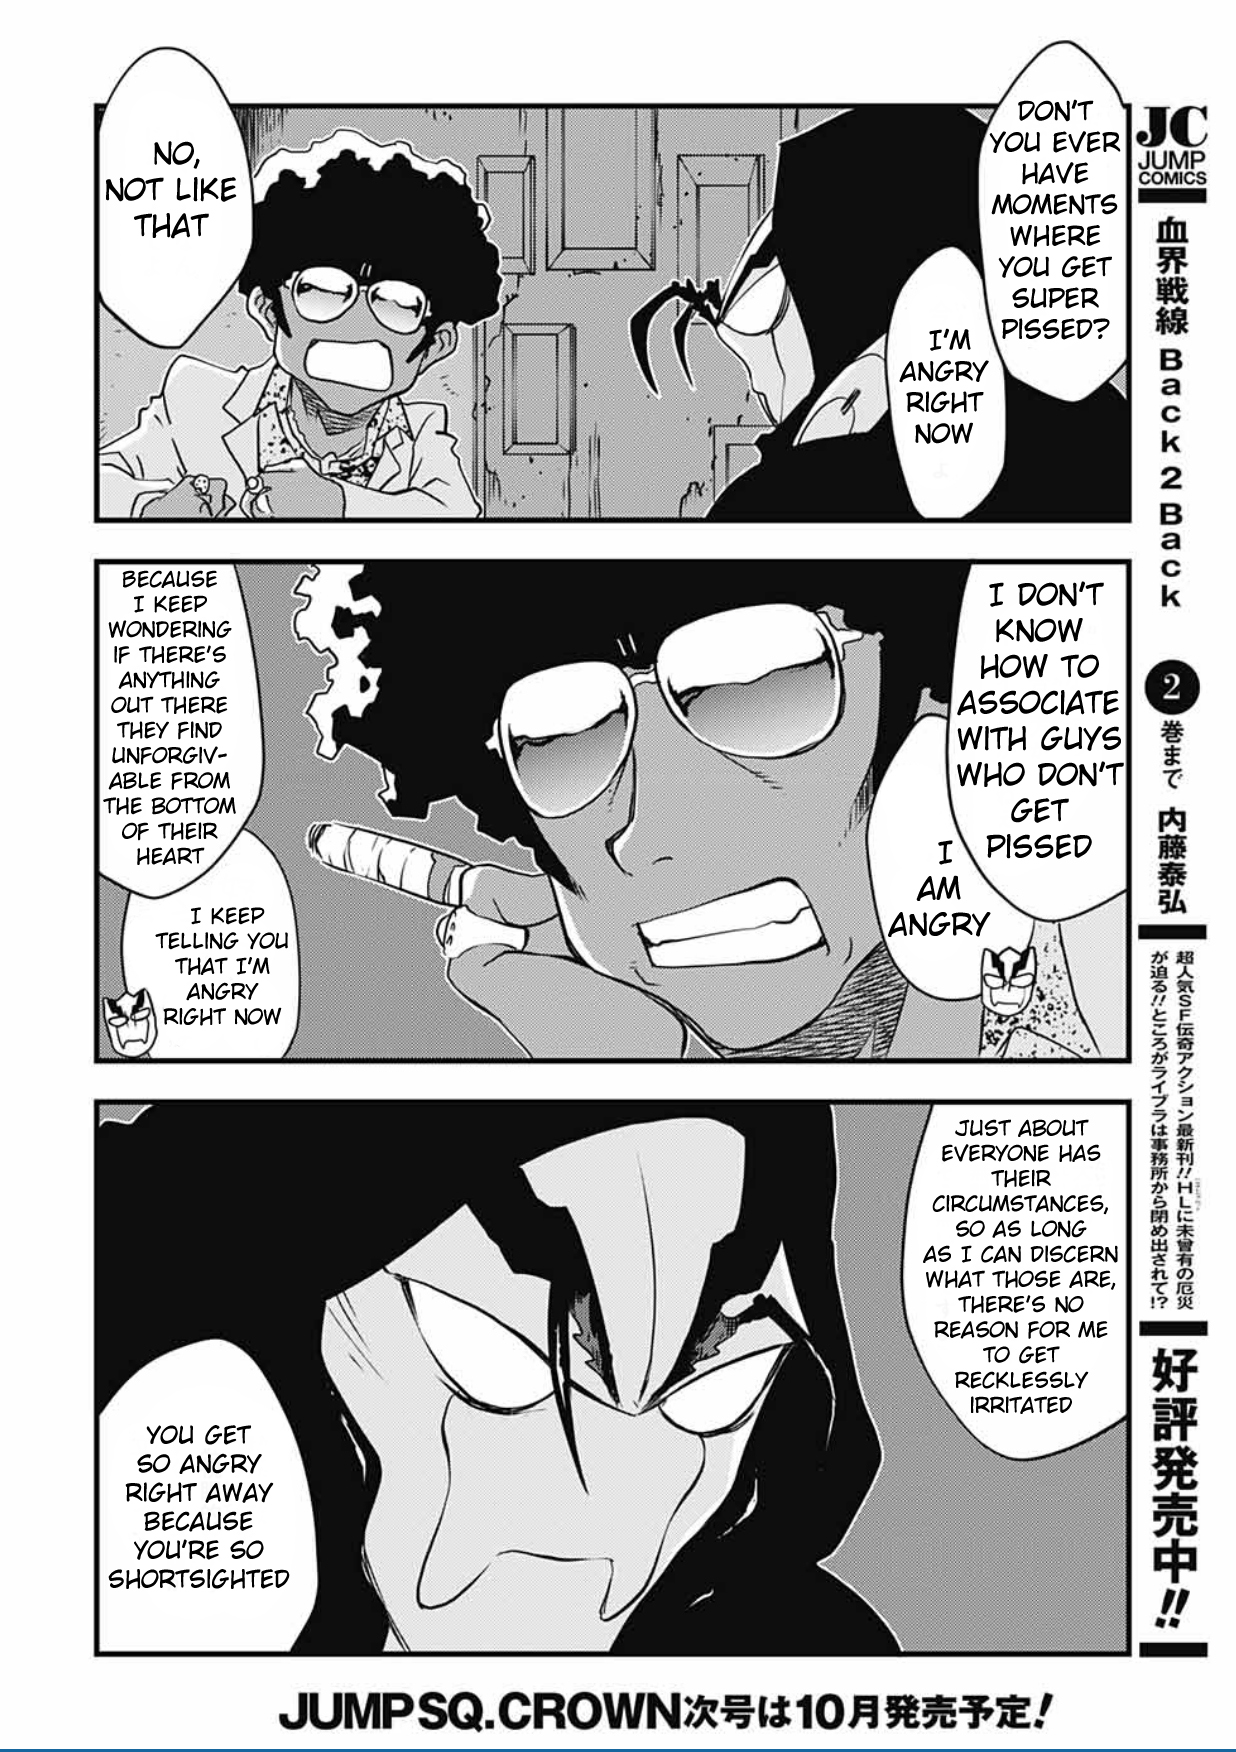 Kekkai Sensen: Back 2 Back Vol. 4 Ch. 11 Angry Young Merman